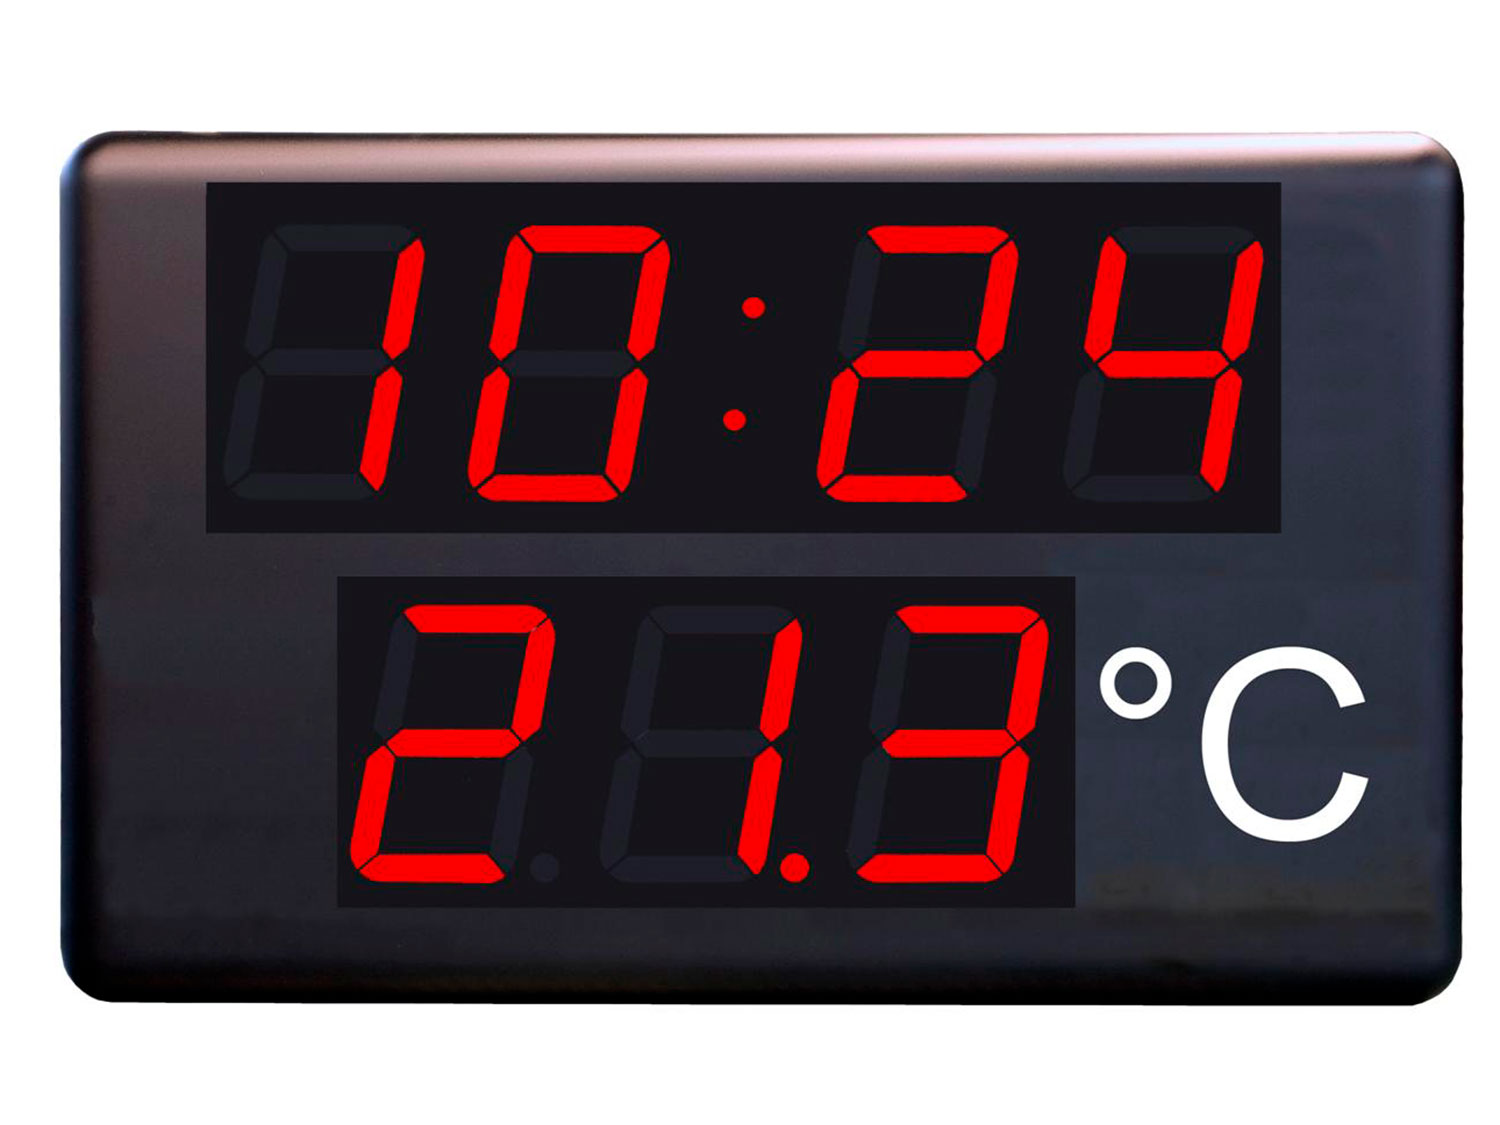 Reloj, termómetro industrial